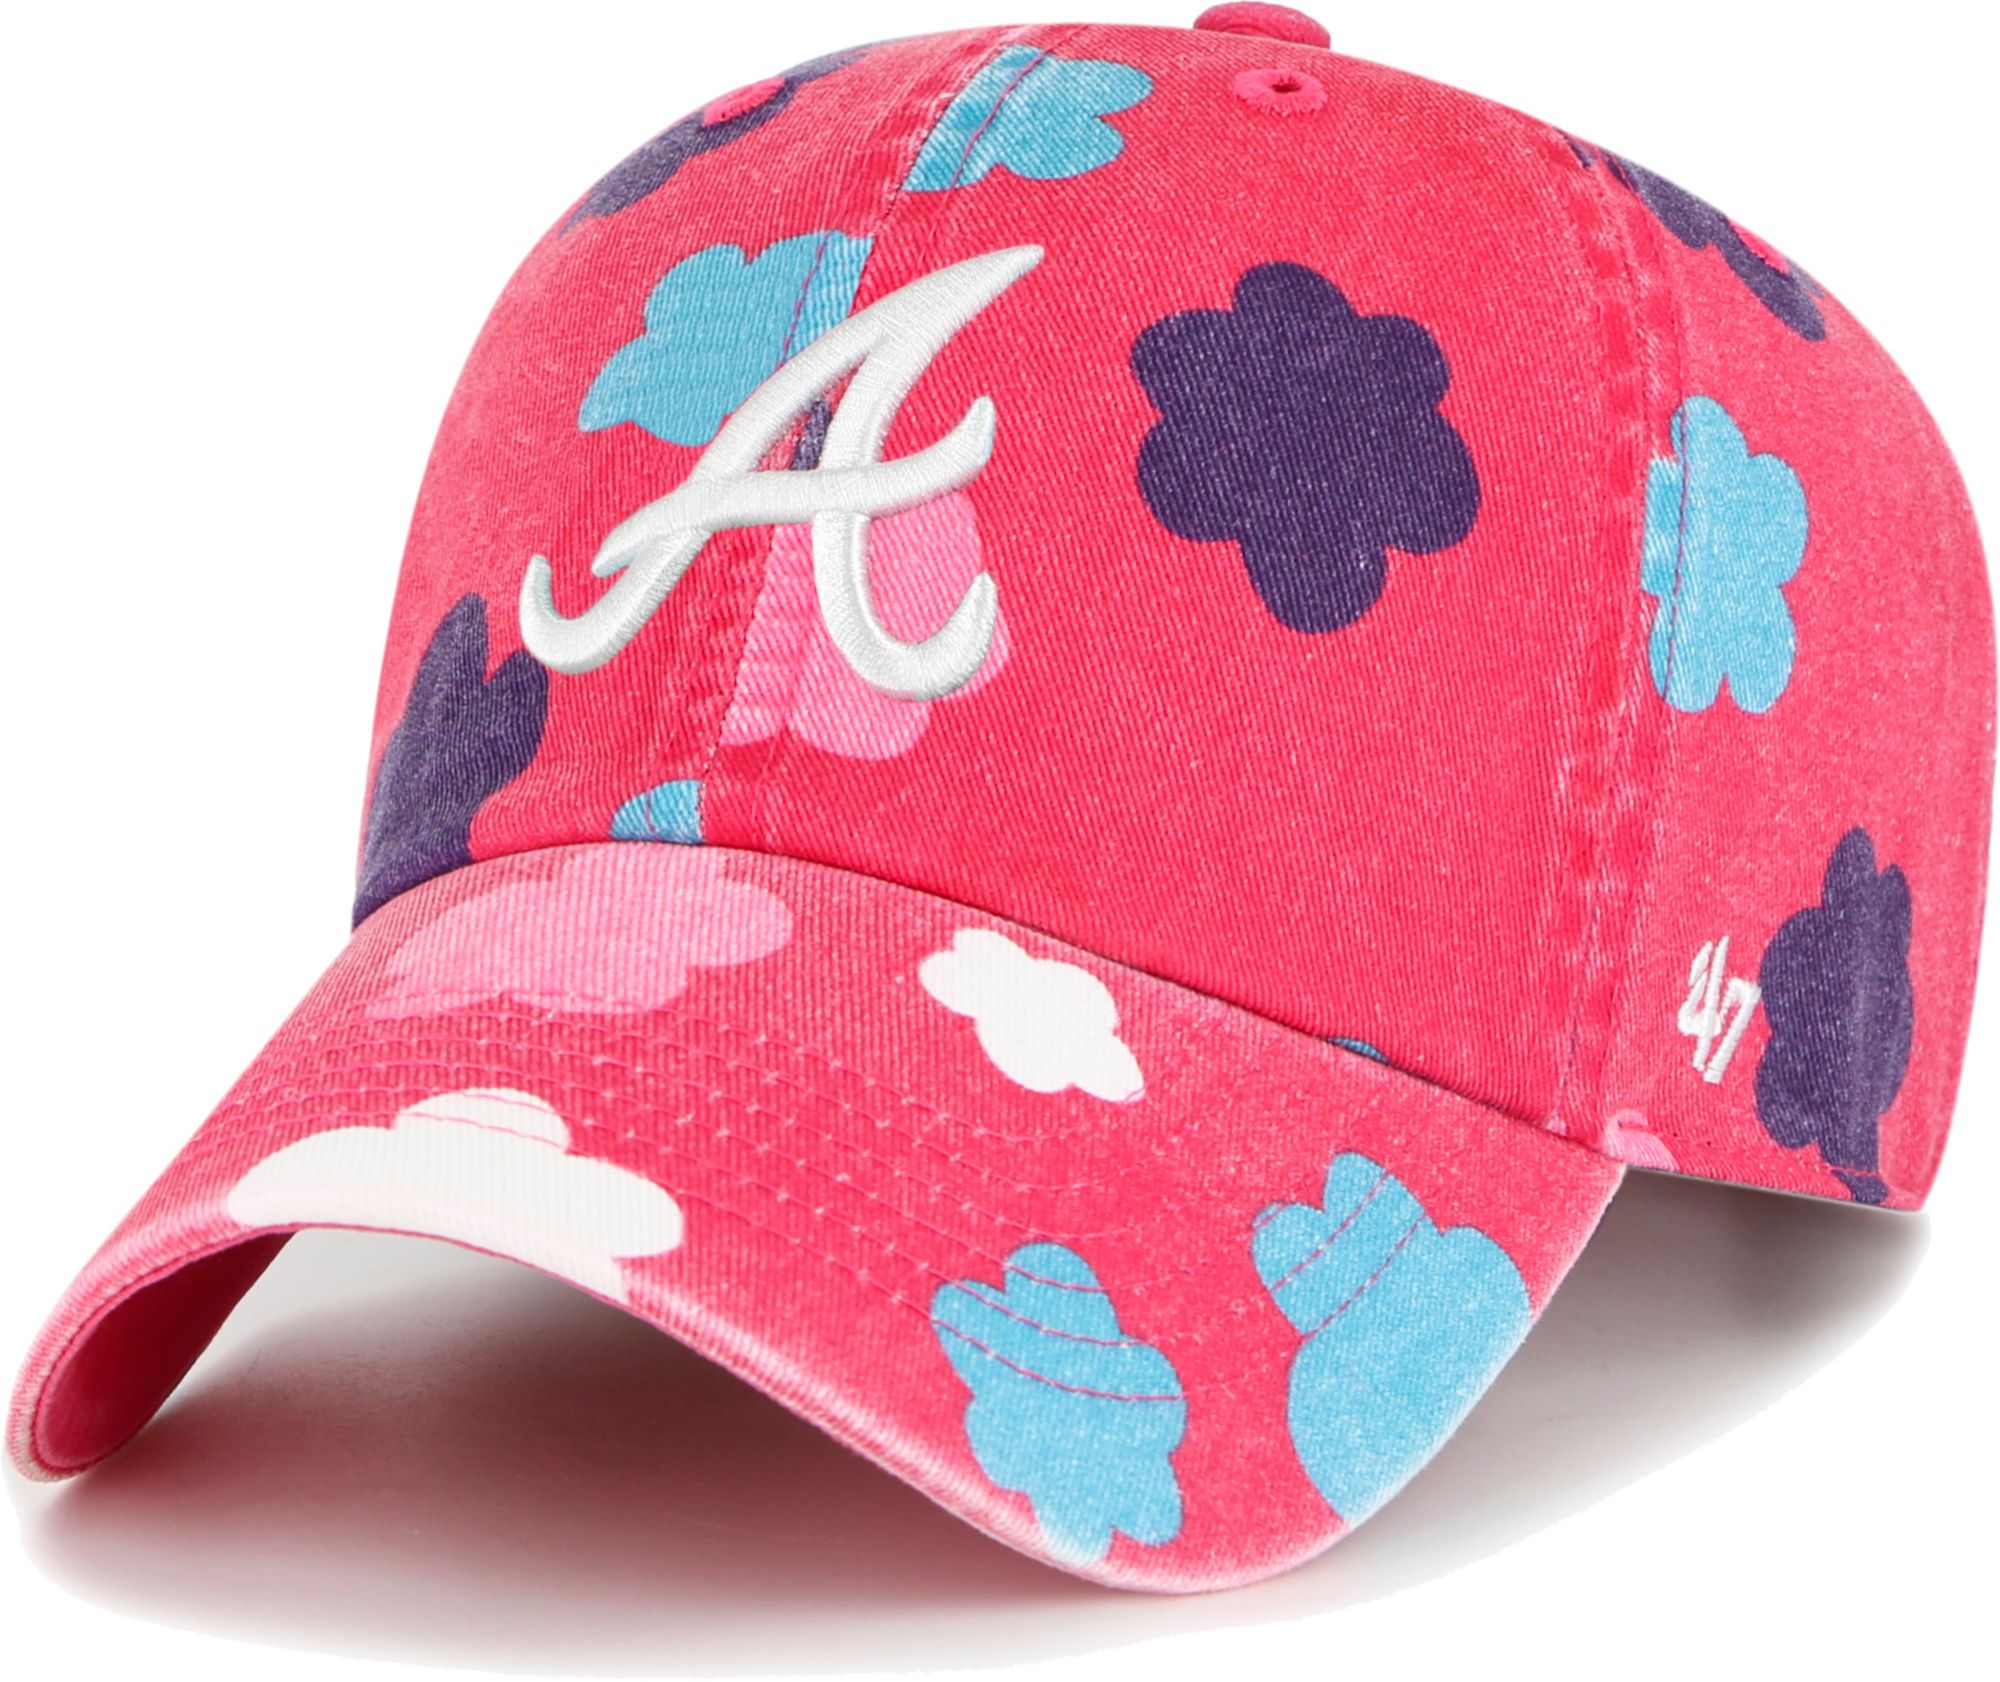 Atlanta Braves New Era Camo 9TWENTY Adjustable Hat